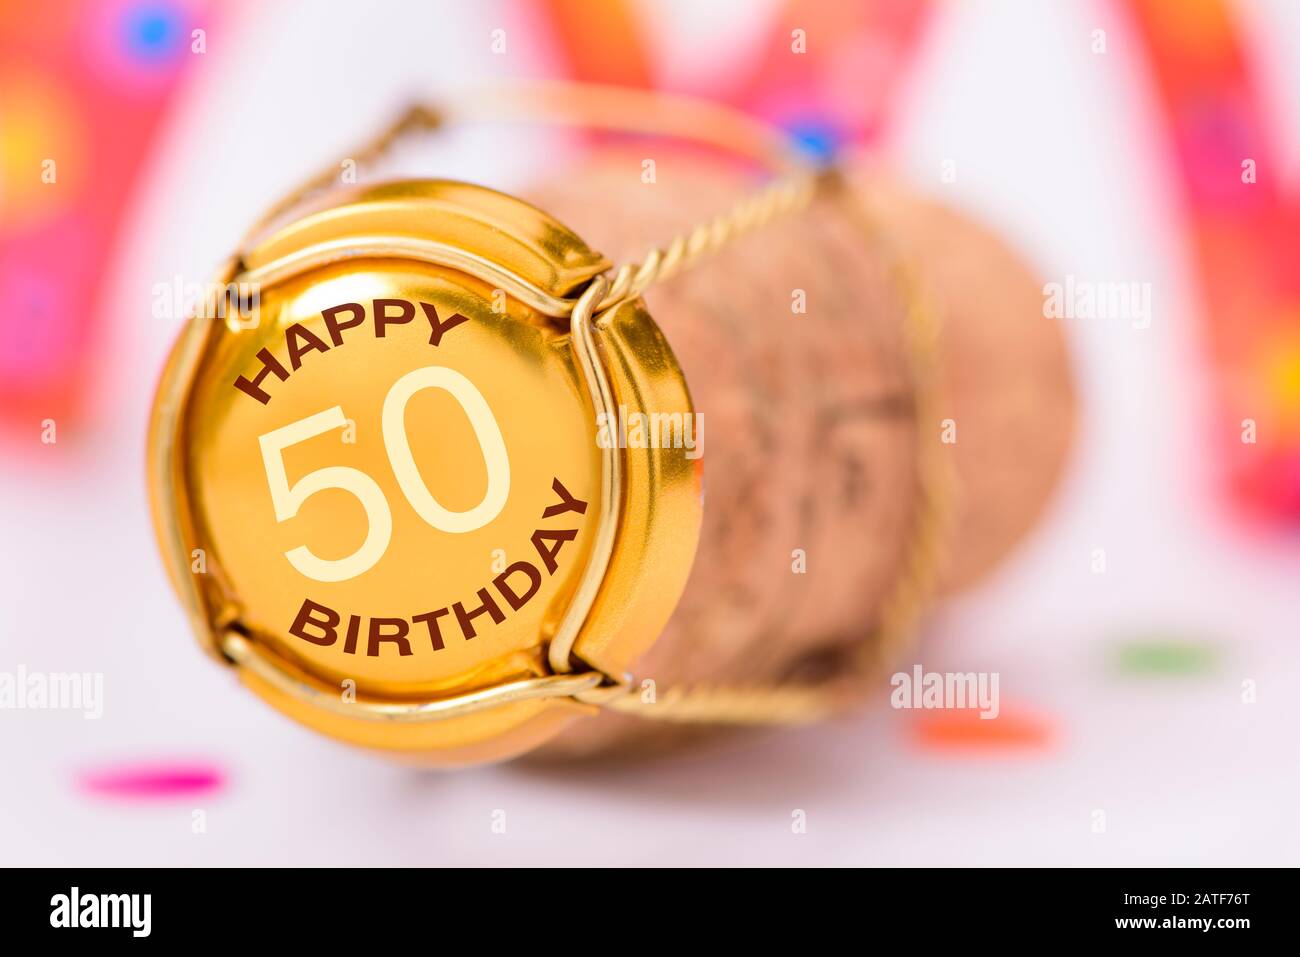 Carte anniversaire 50 ans - Happy birthday, 50 years